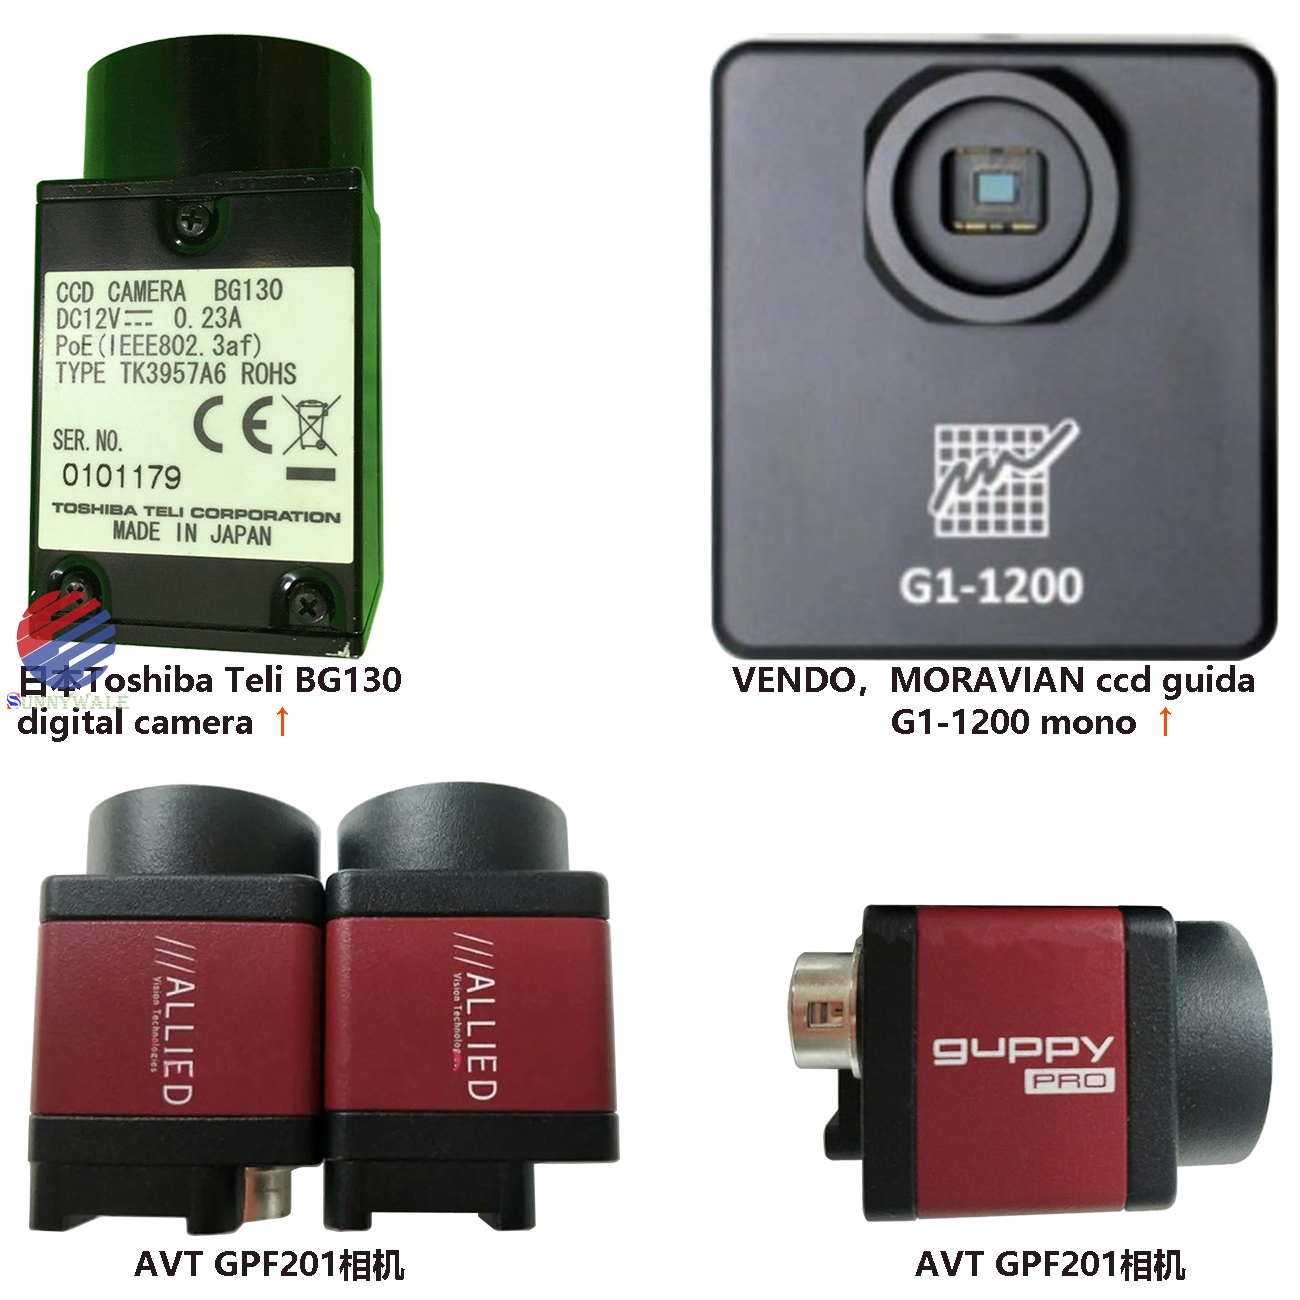 Toshiba Teli BG130 digital camera;; VENDO, MORAVIAN ccd guida G1-1200 mono;; AVT GPF201 camera tail 1394 interface